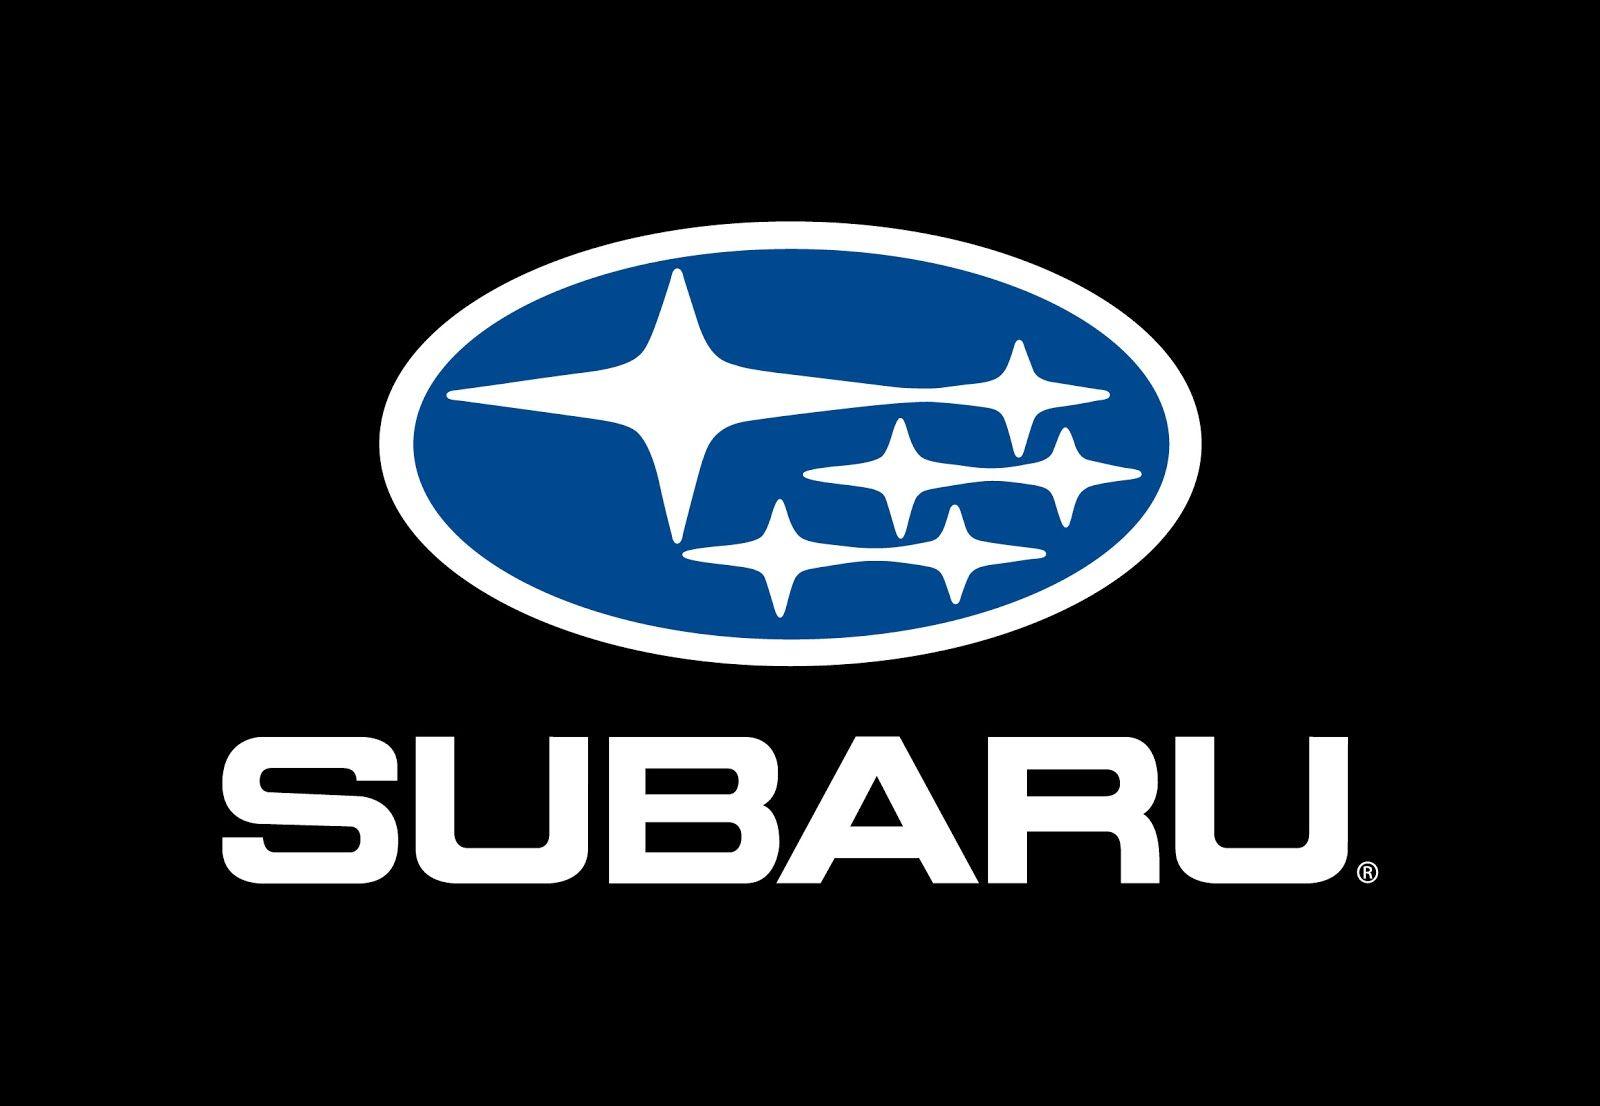 Old Subaru Logo - Subaru Logo, Subaru Car Symbol Meaning and History | Car Brand Names.com